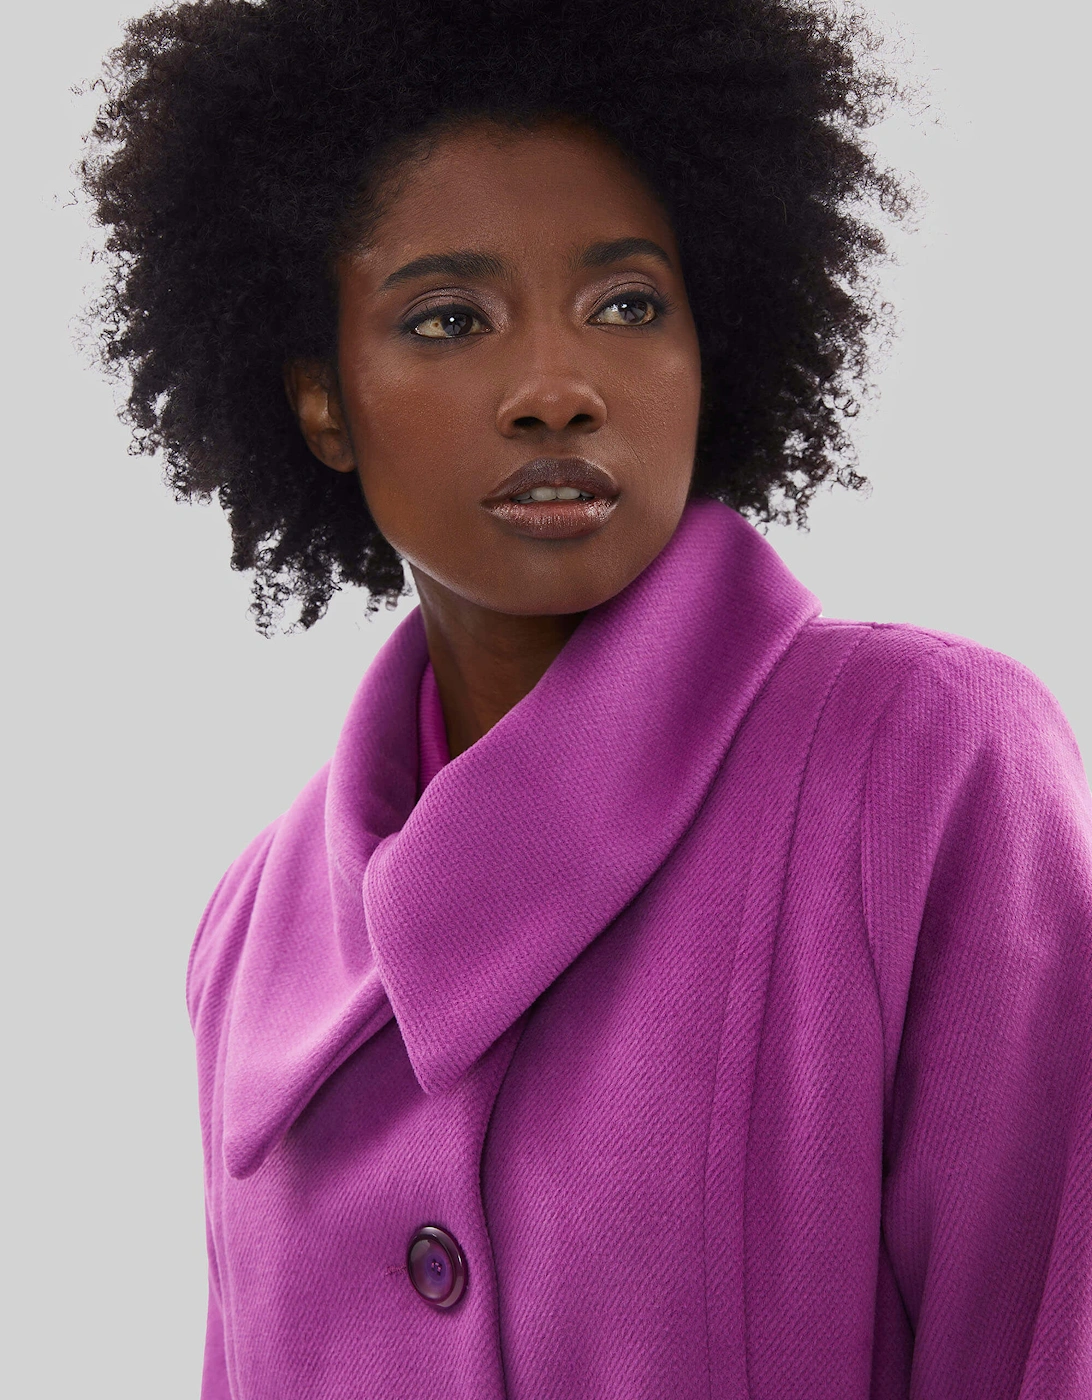 Large Collar Belted Coat Purple